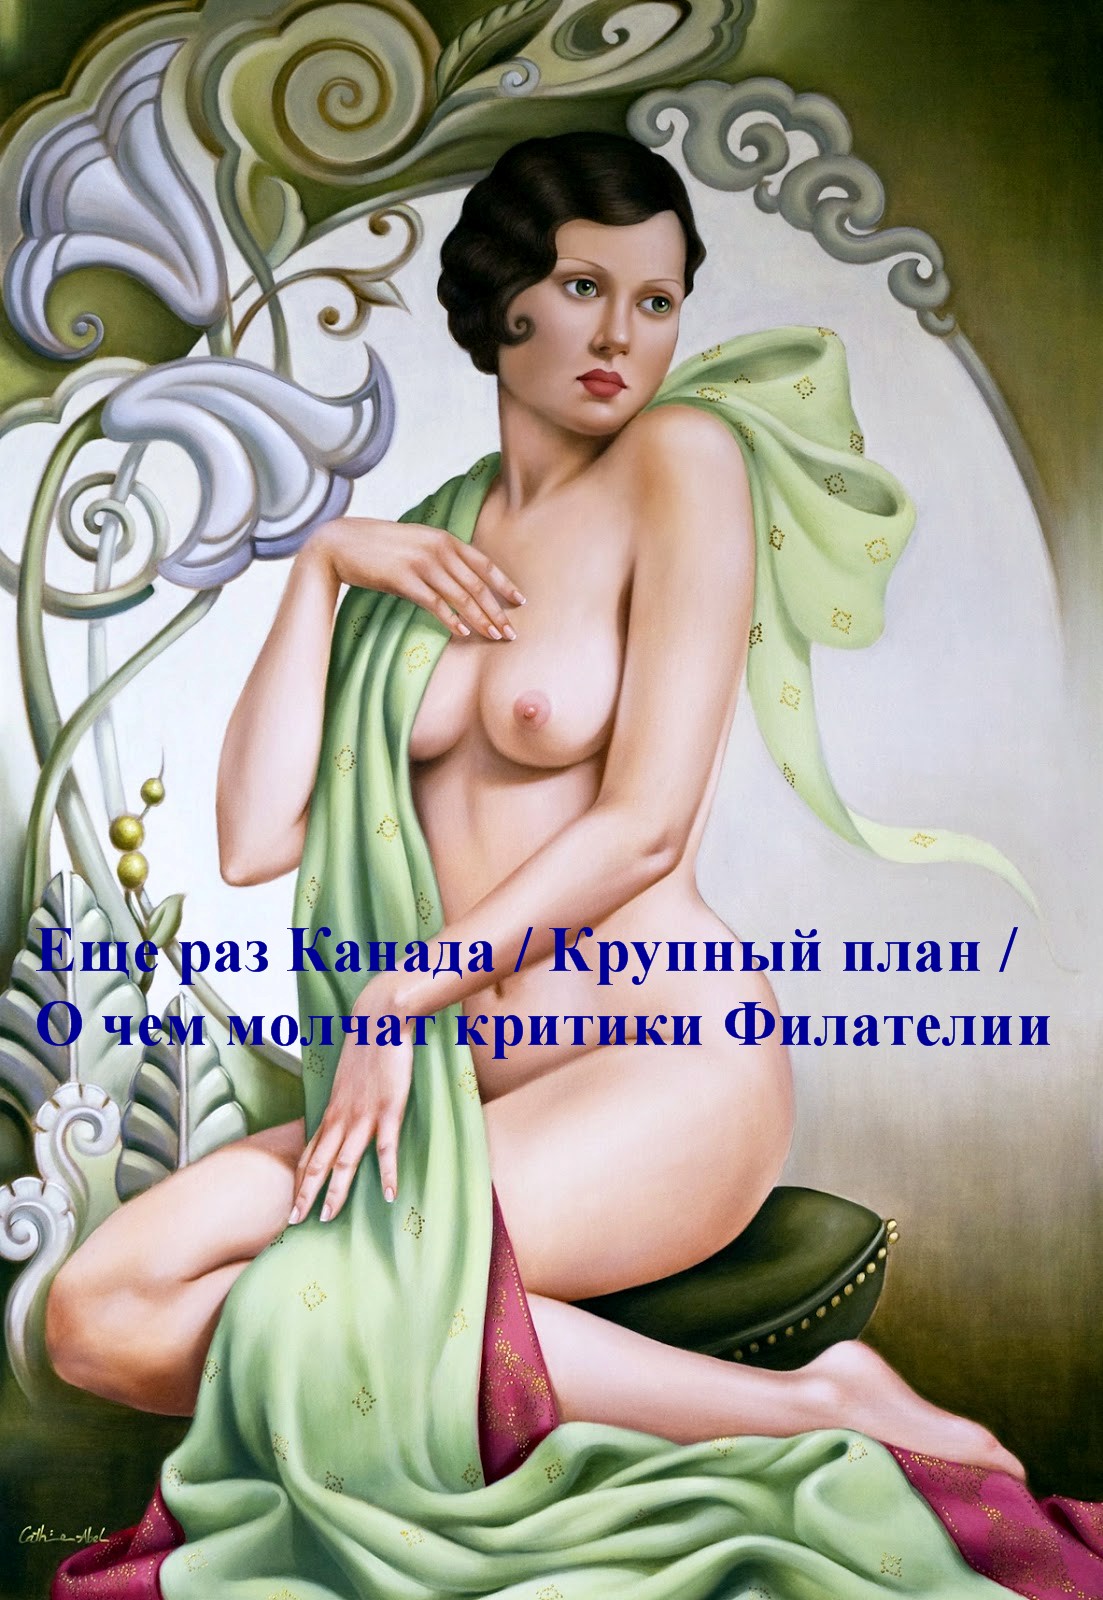 http://i72.fastpic.ru/big/2015/0521/81/f56884b7c0a85ffaebacfc71b53e3381.jpg